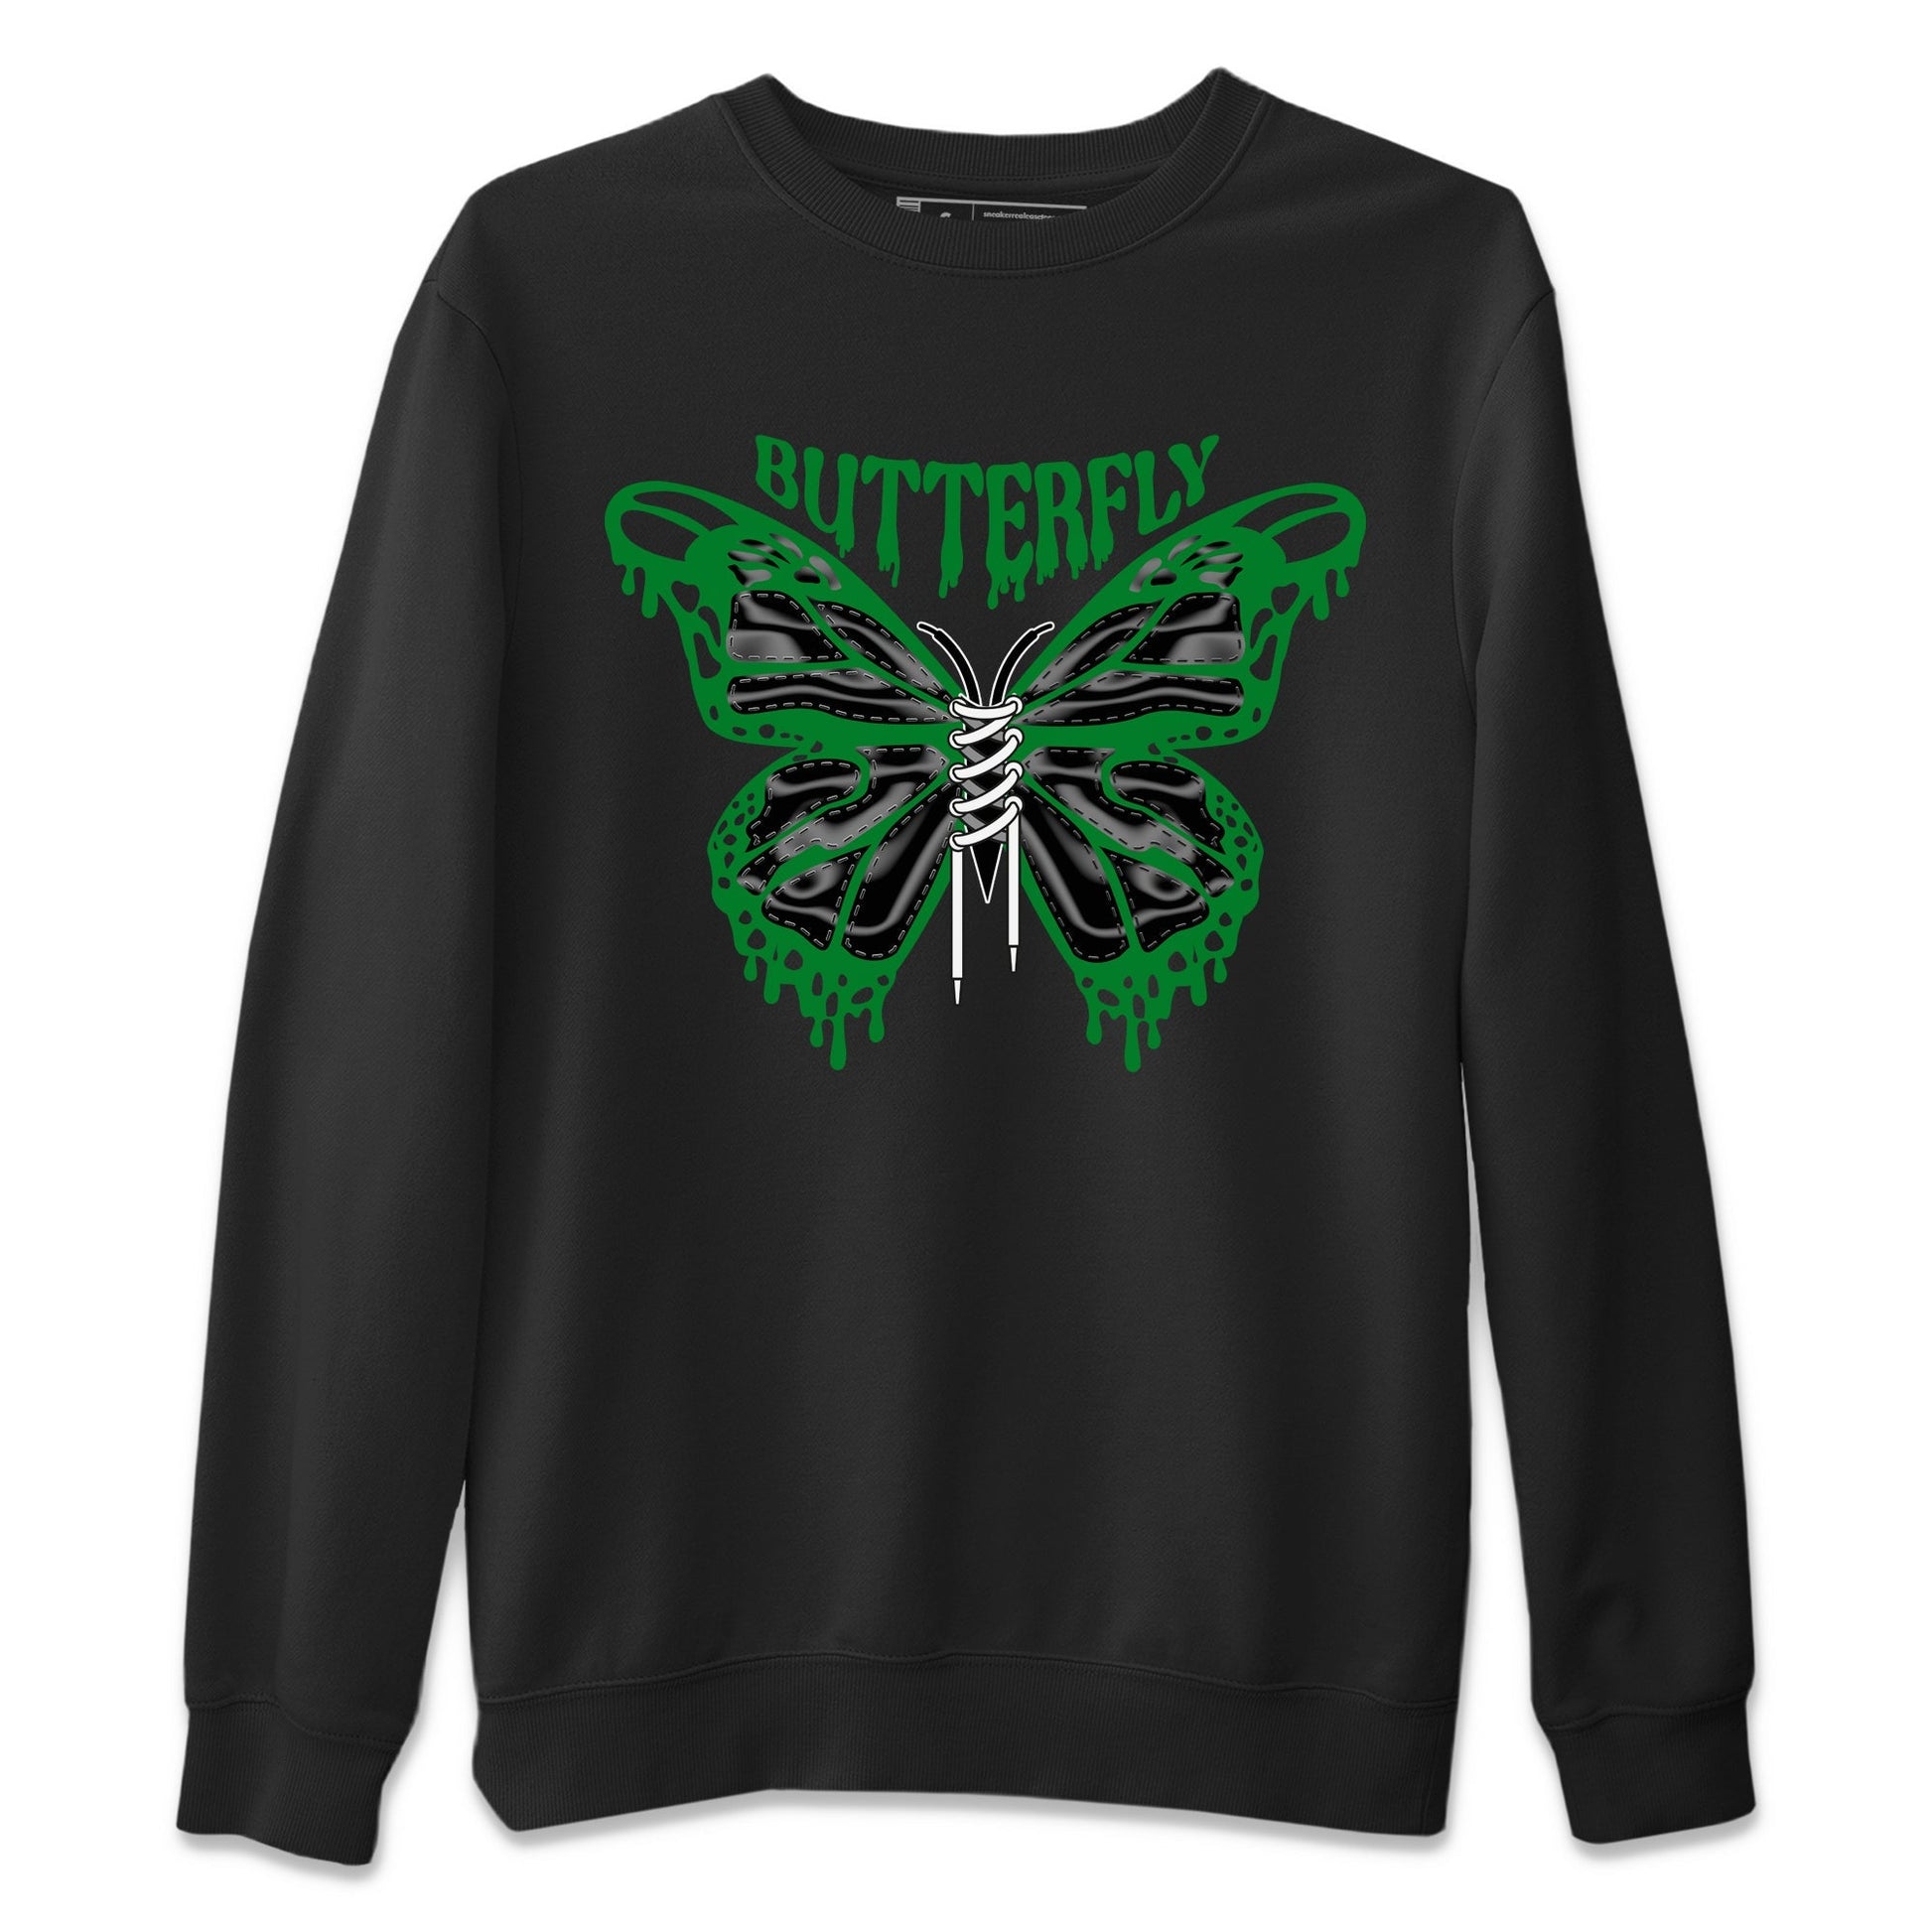 Air Jordan 1 Celtics Sneaker Match Tees Butterfly Sneaker Tees AJ1 OG HIGH Celtics Sneaker Release Tees Unisex Shirts Black 2